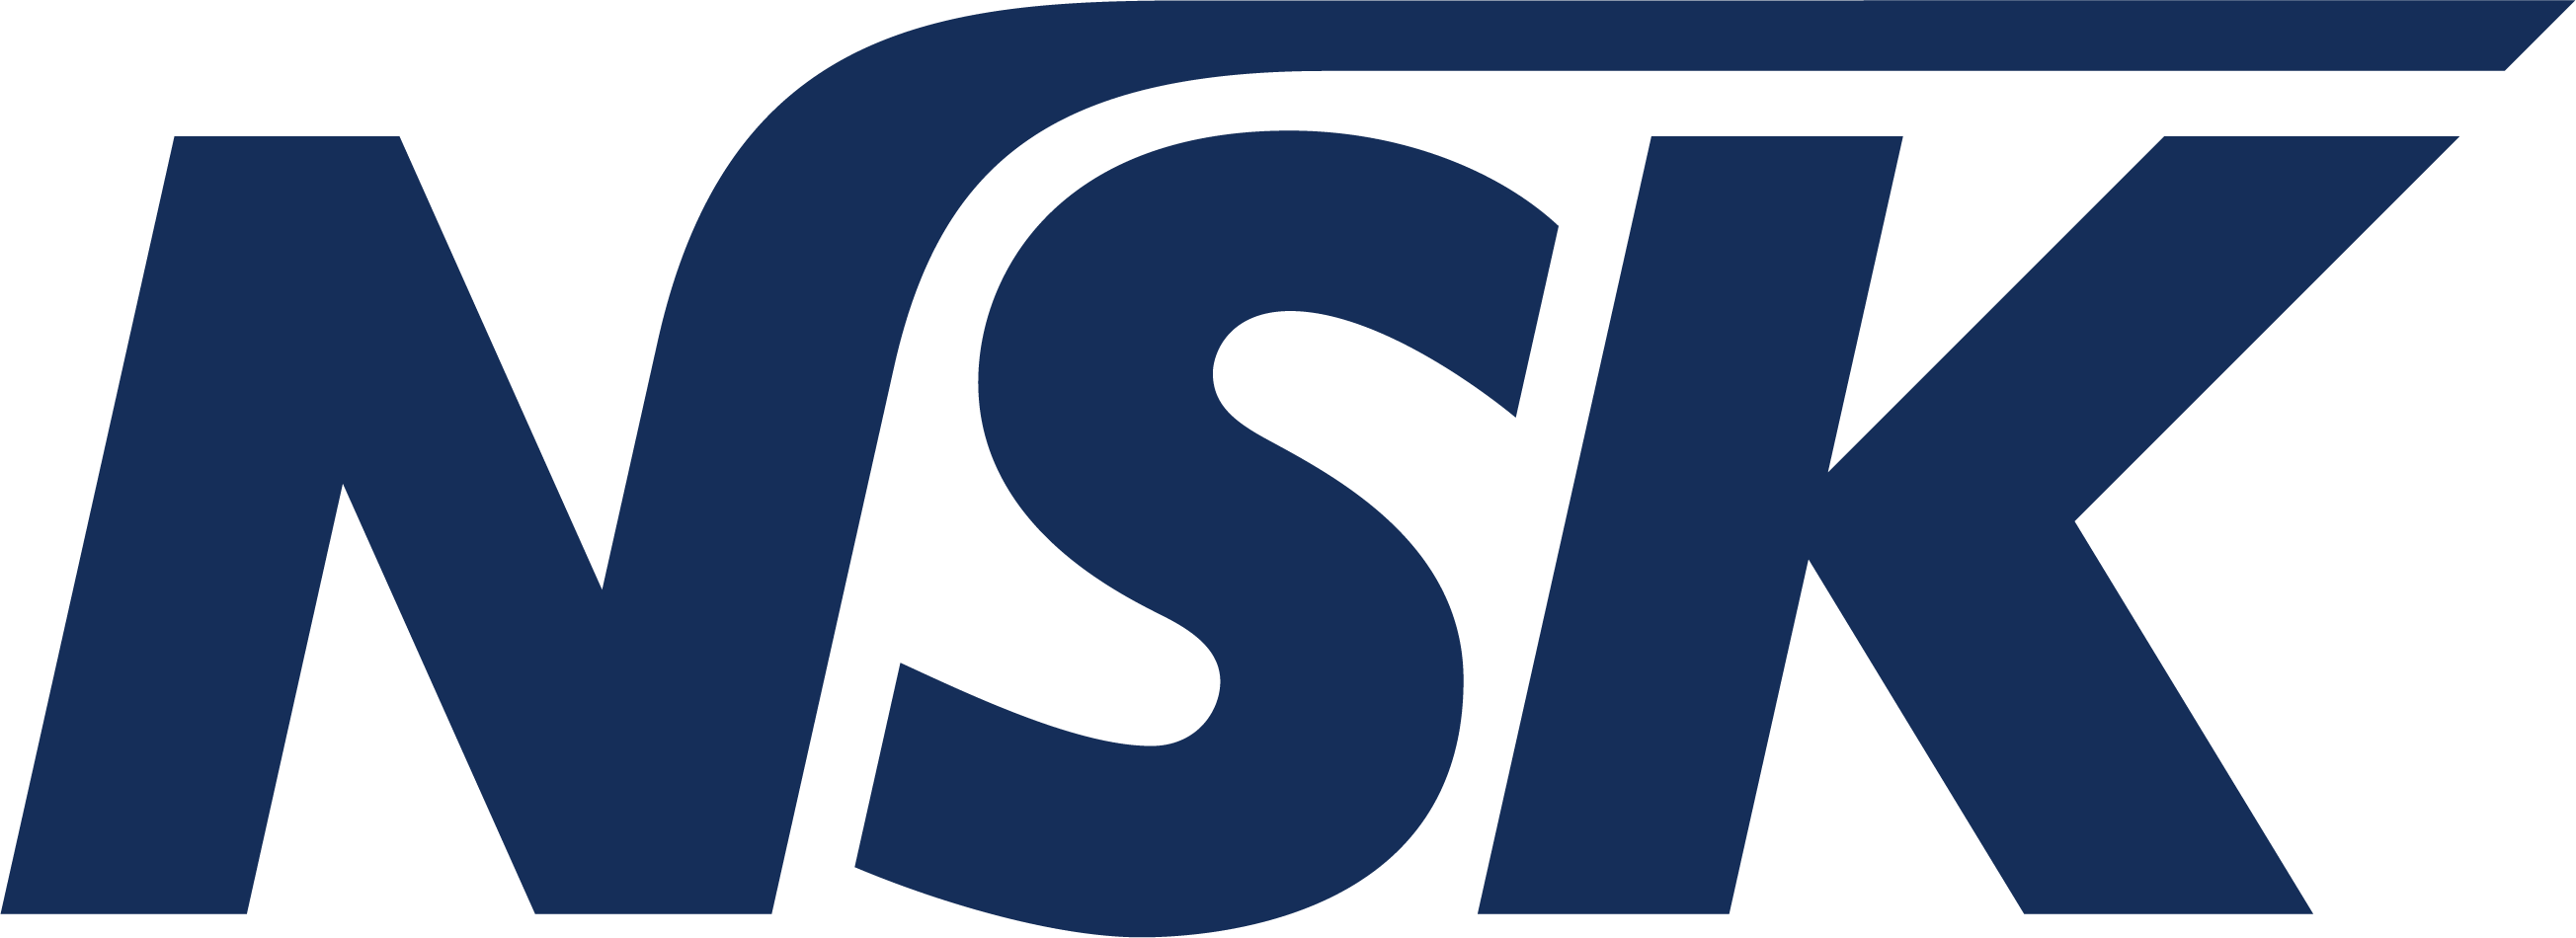 M4 nsk. Подшипники NSK logo. NSK Nakanishi. NSK логотип стоматология. NSK бренд логотип.